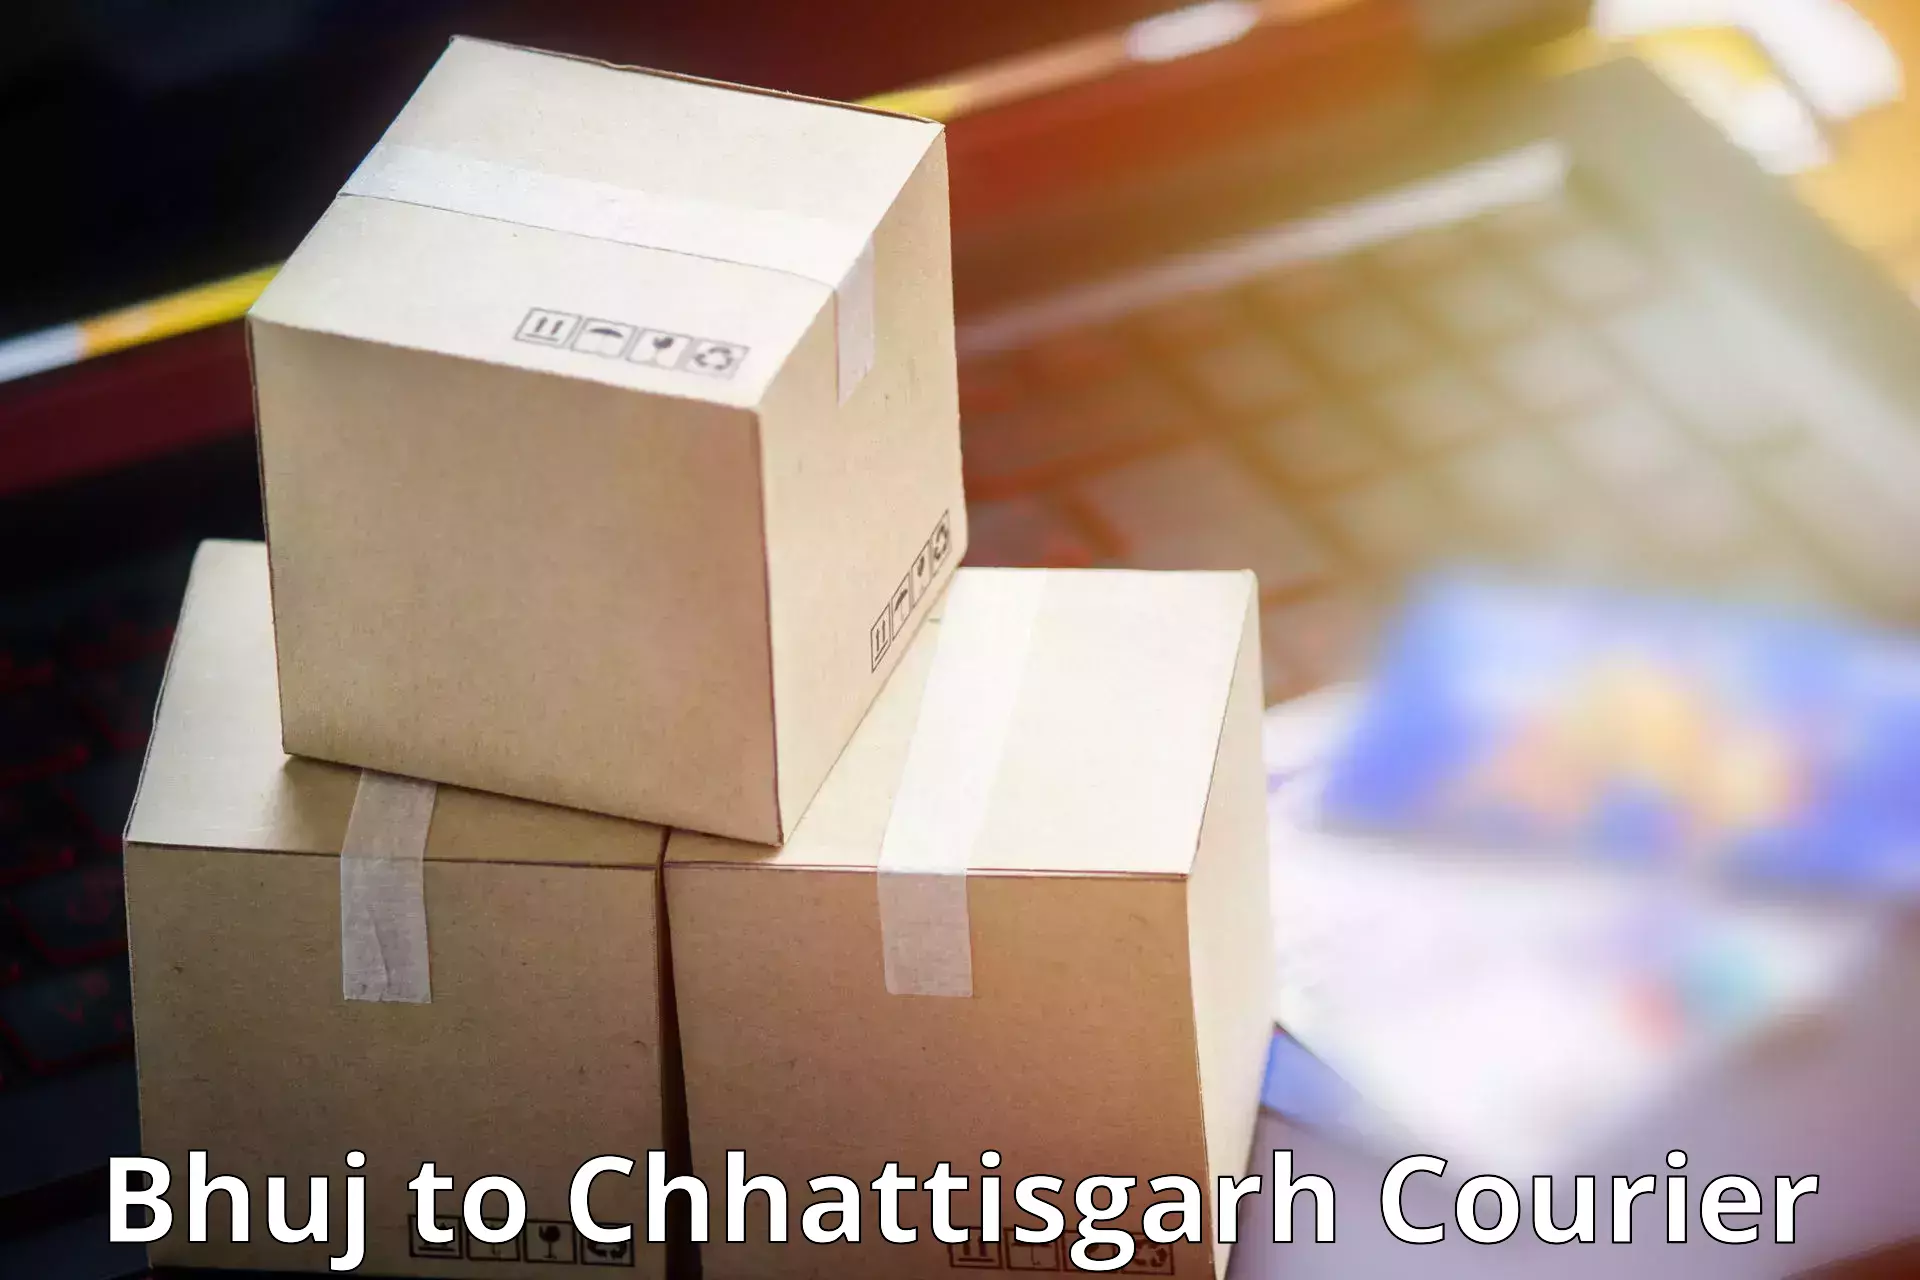 Global shipping networks Bhuj to Patna Chhattisgarh